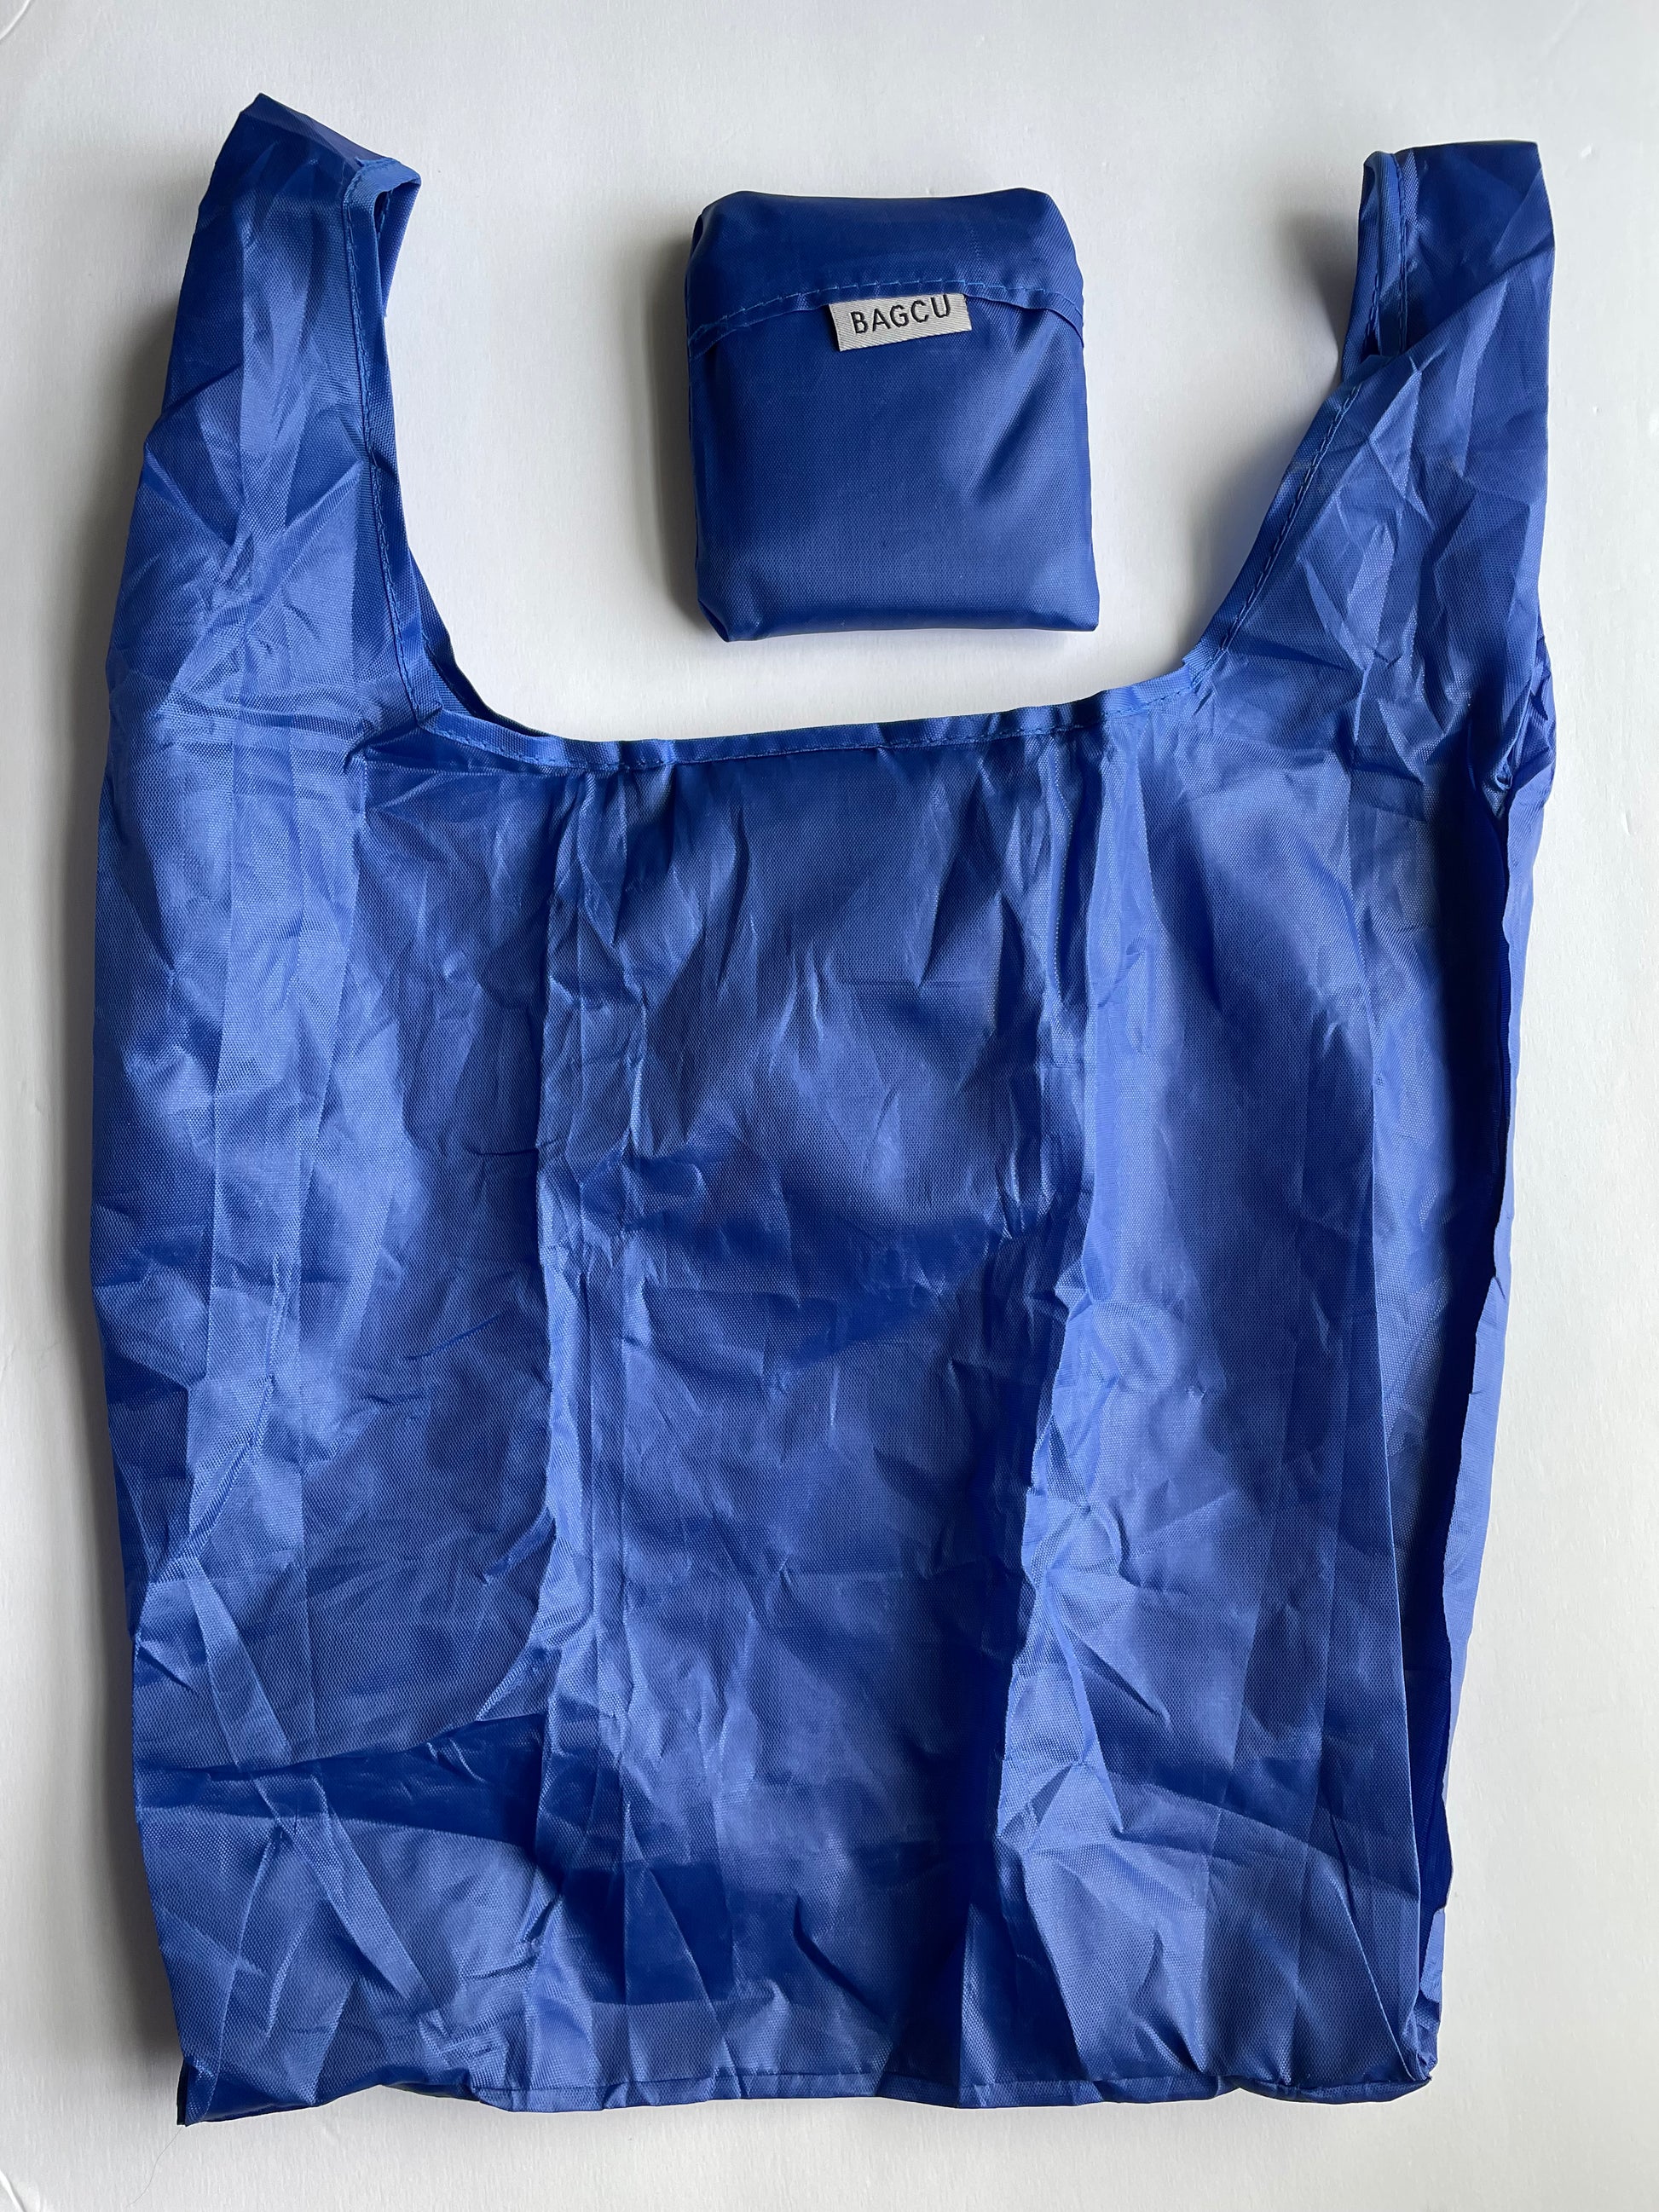 Buy Glad Easy-Tie 11578PAK2 Recycling Bag, L, 77 L, Plastic, Blue L, 77 L,  Blue